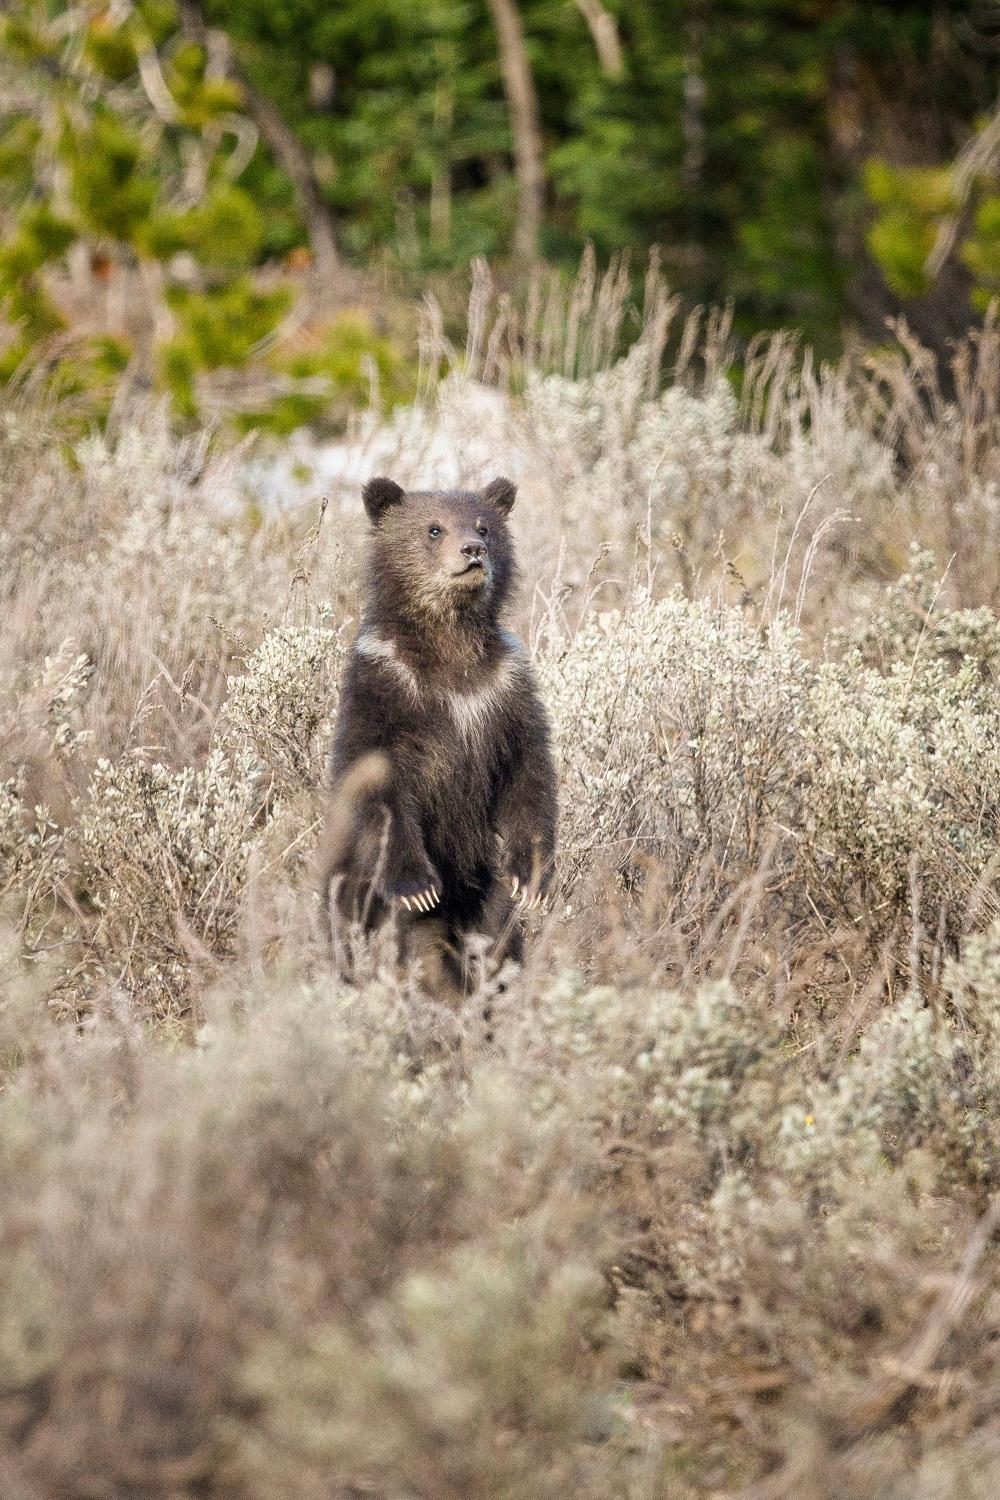 Grizzly 399's cub (Courtesy of <a href="https://www.instagram.com/vangophotos/">Jorn Vangoidtsenhoven</a>)